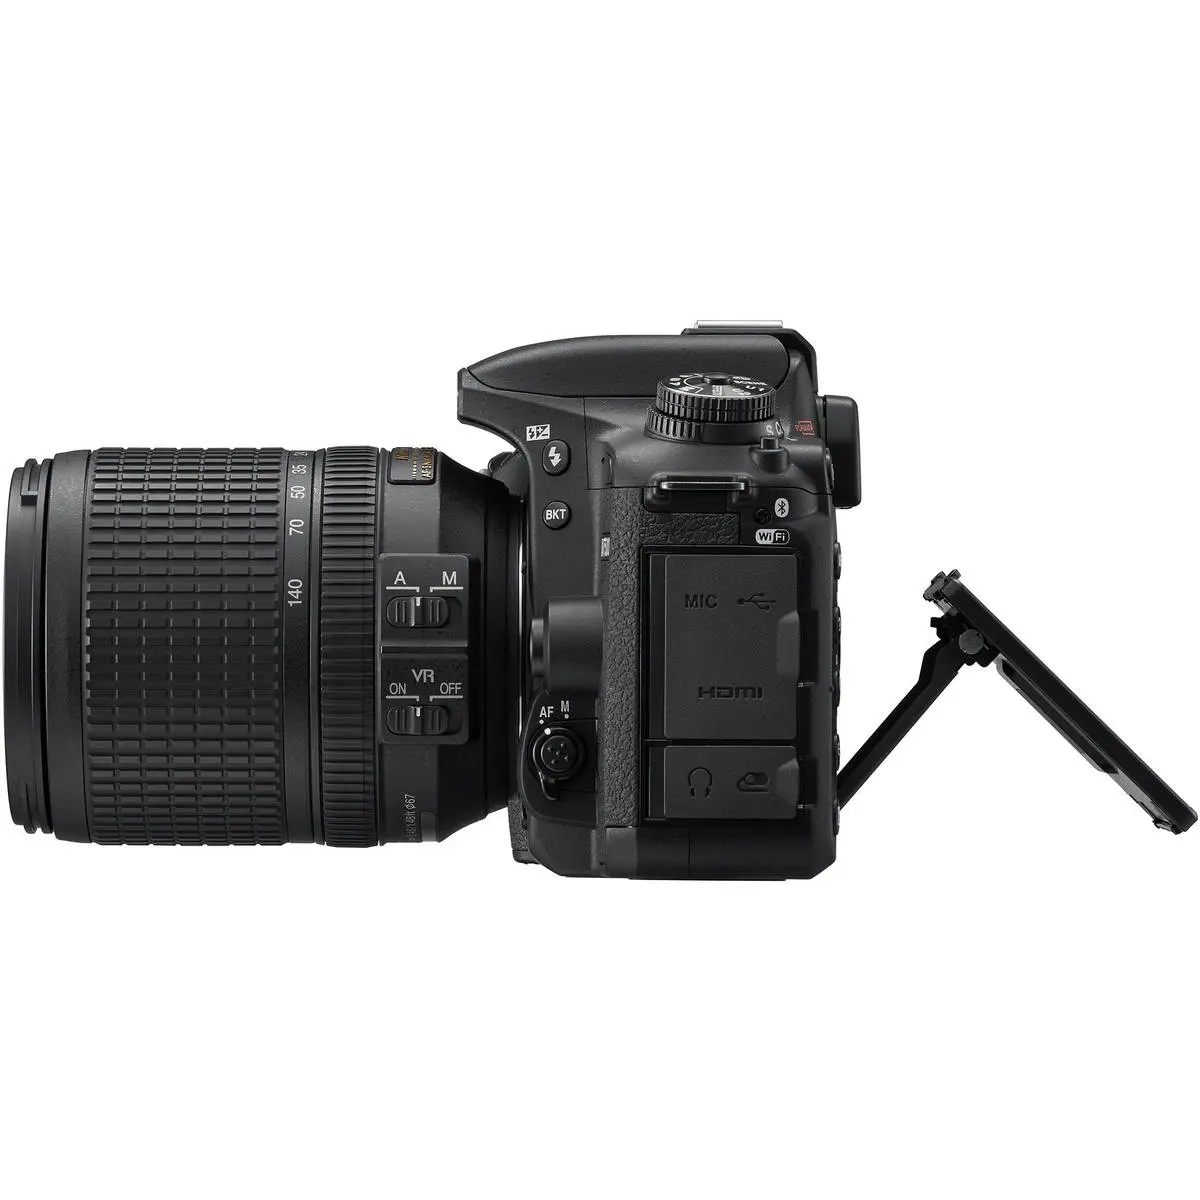 7. Nikon D7500 18-140 kit 20.9MP 4K UltraHD Digital SLR Camera